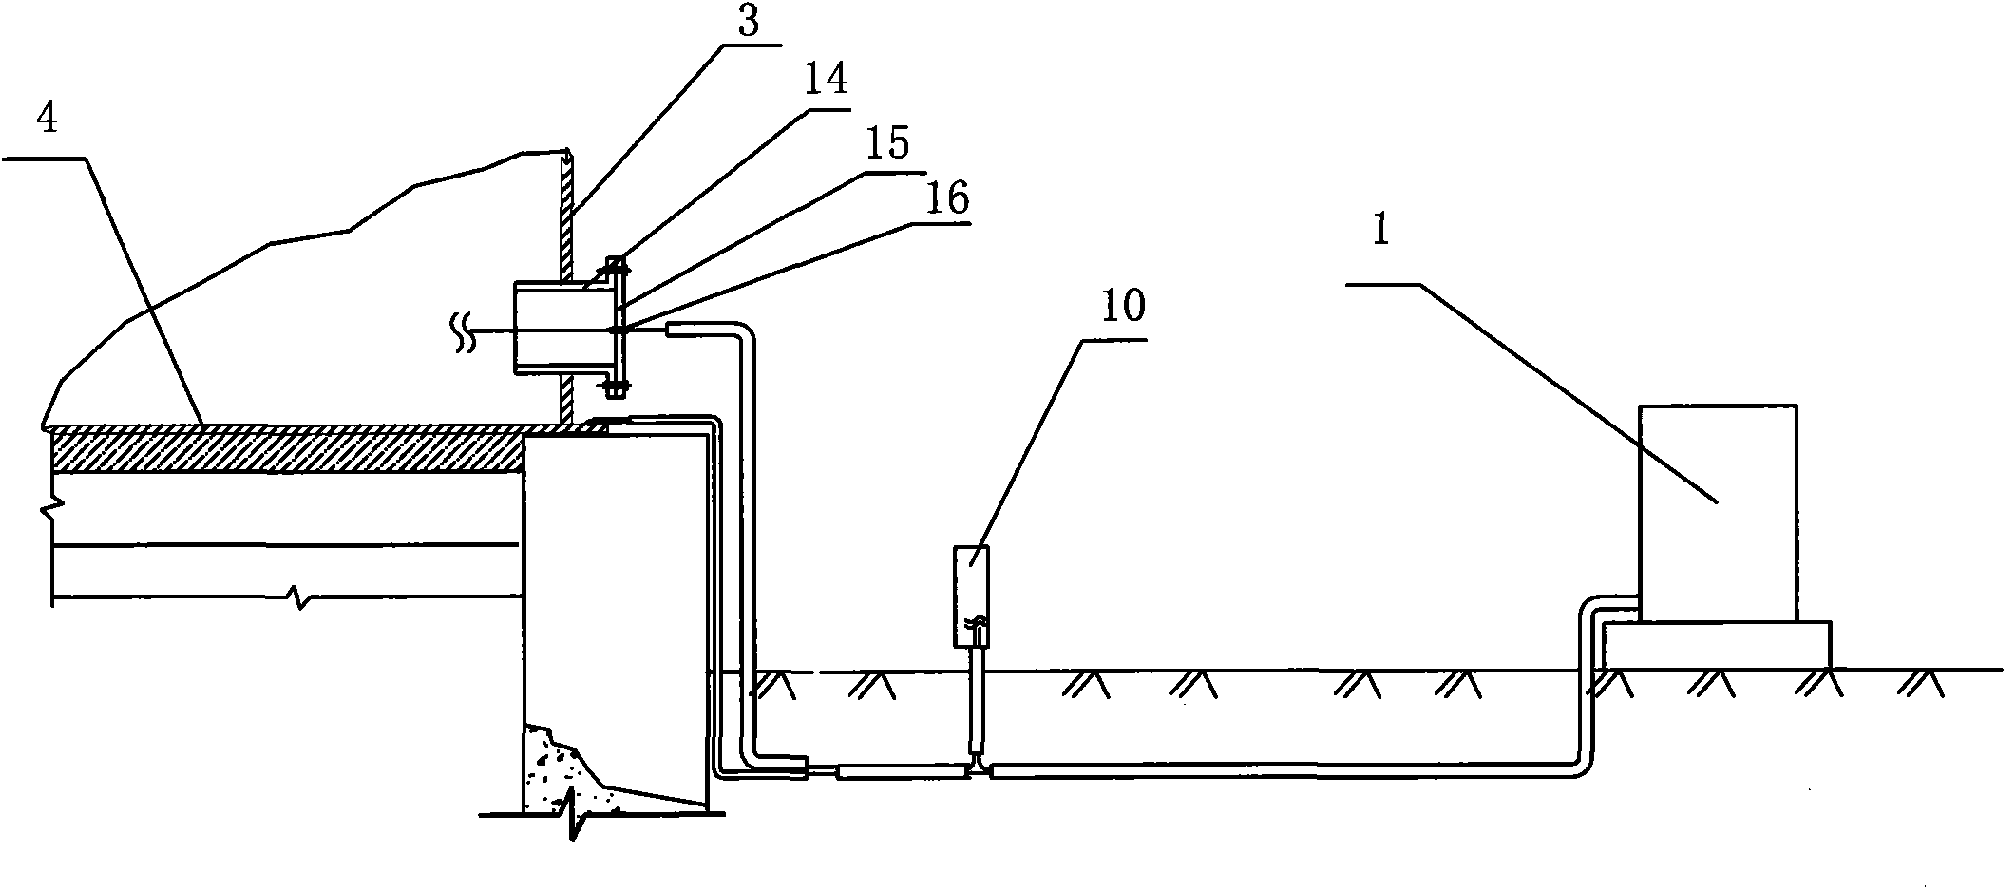 Anticorrosive device of oil storage tank during testing seawater pressure